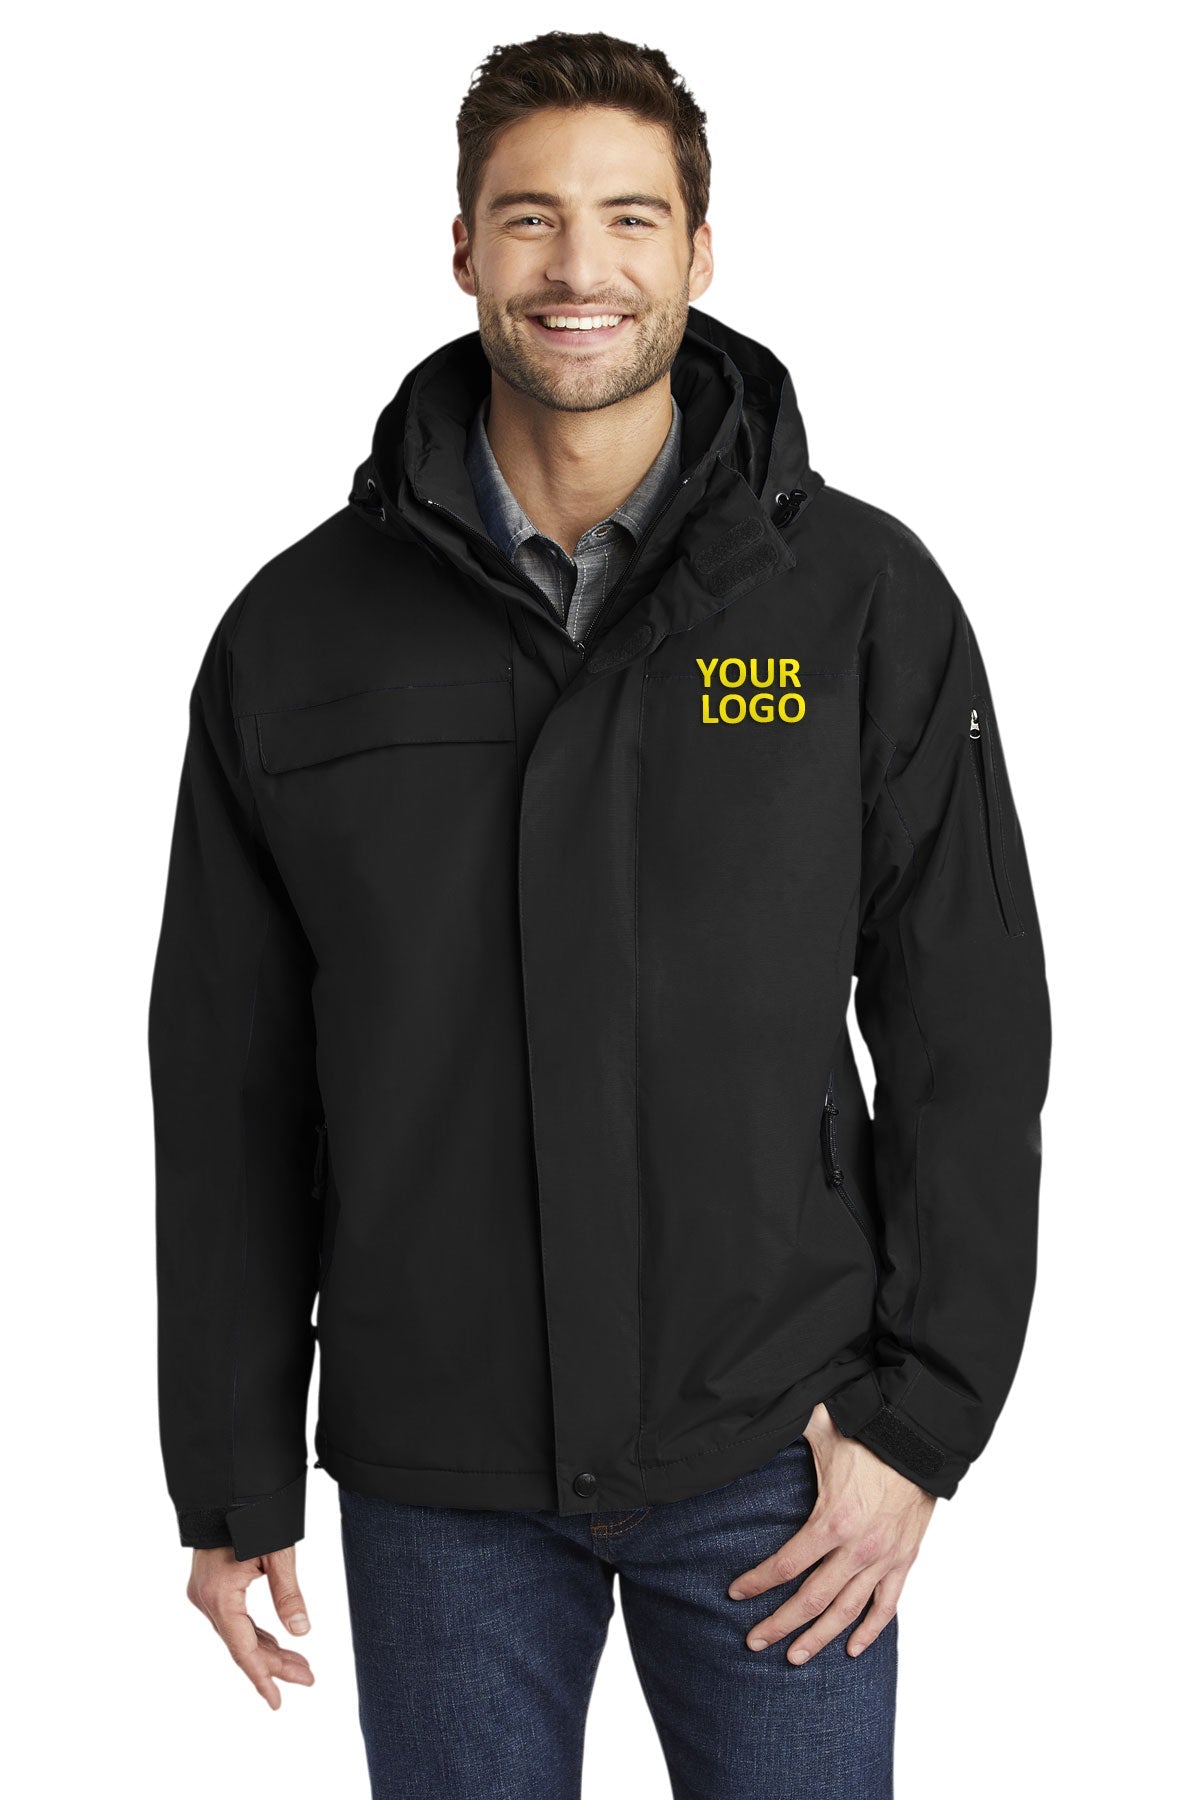 Port Authority Black/ Black TLJ792 business jackets with logo